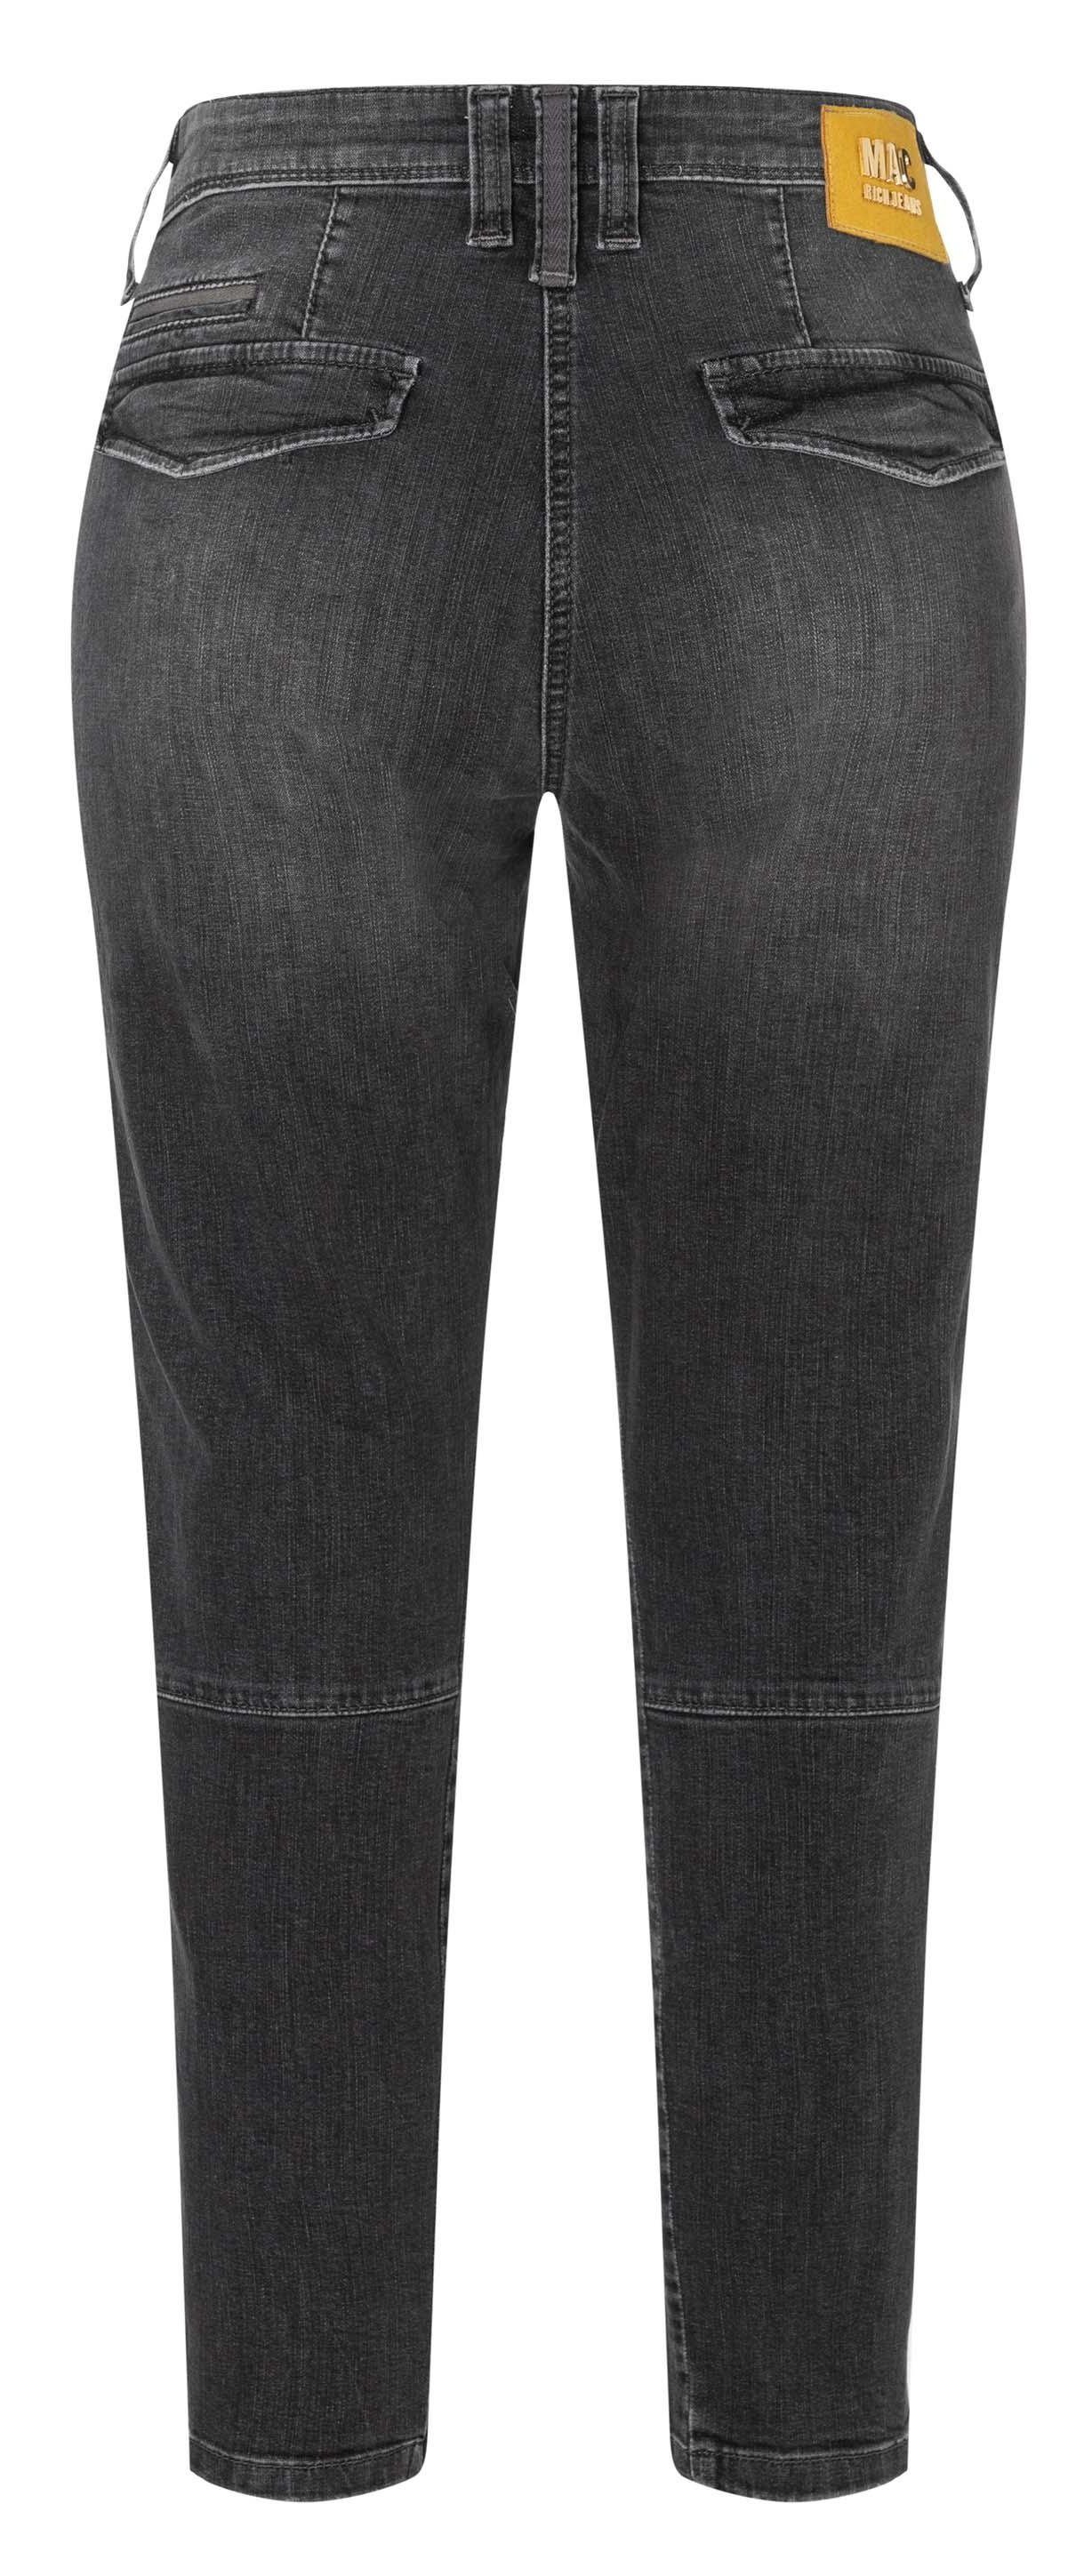 MAC Stretch-Jeans MAC RICH black D928 used schwarz 2377-97-0398L grey